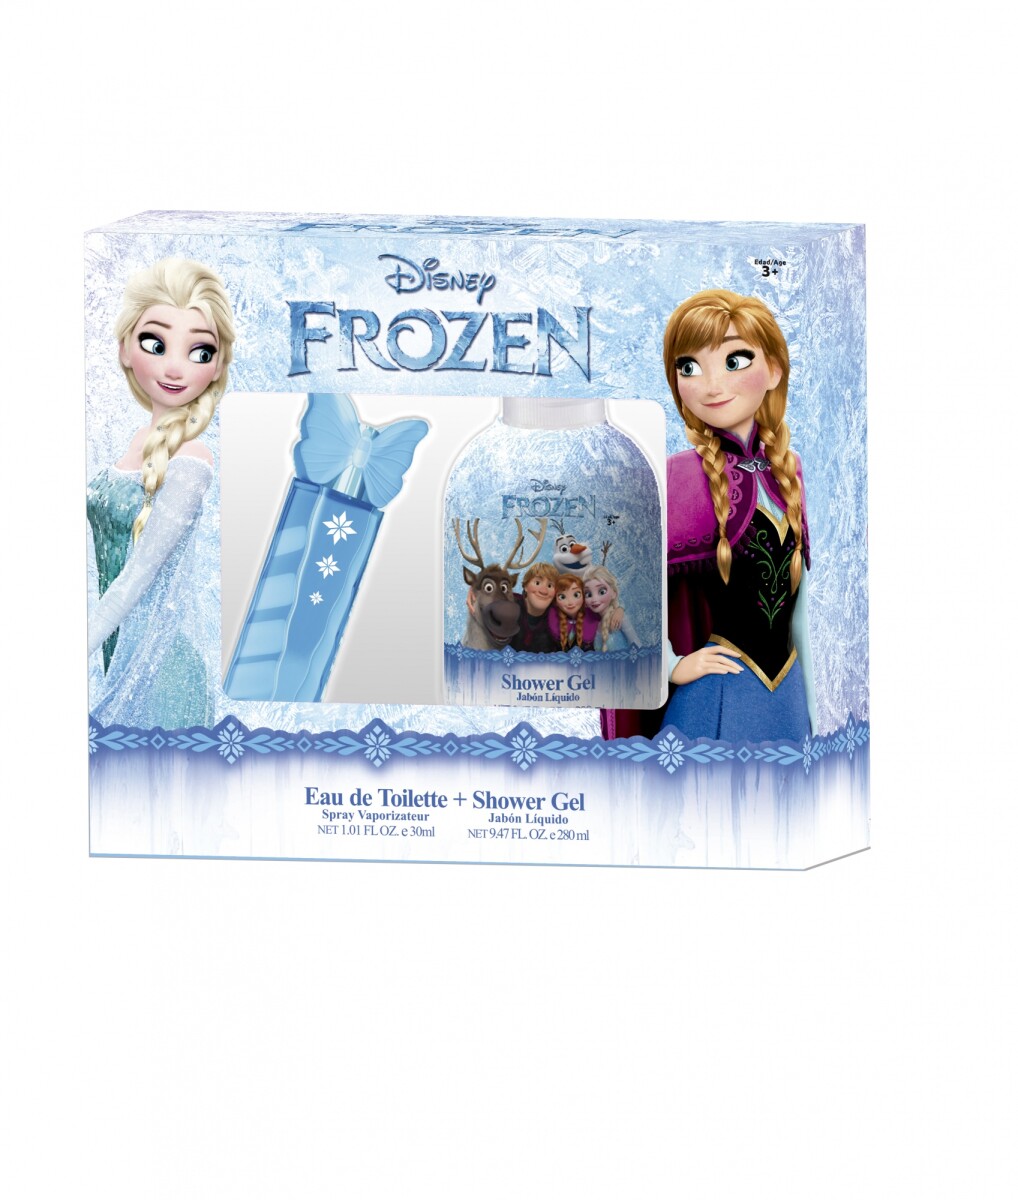 Set Perfume Disney Frozen Edt 30ml.+ Shower Gel 